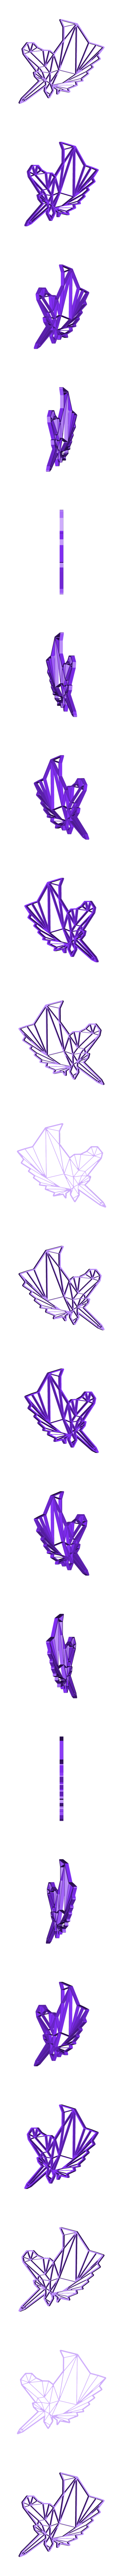 customized_origami_unicorn.stl Download free STL file Customizable Origami Unicorn • 3D print design, MightyNozzle